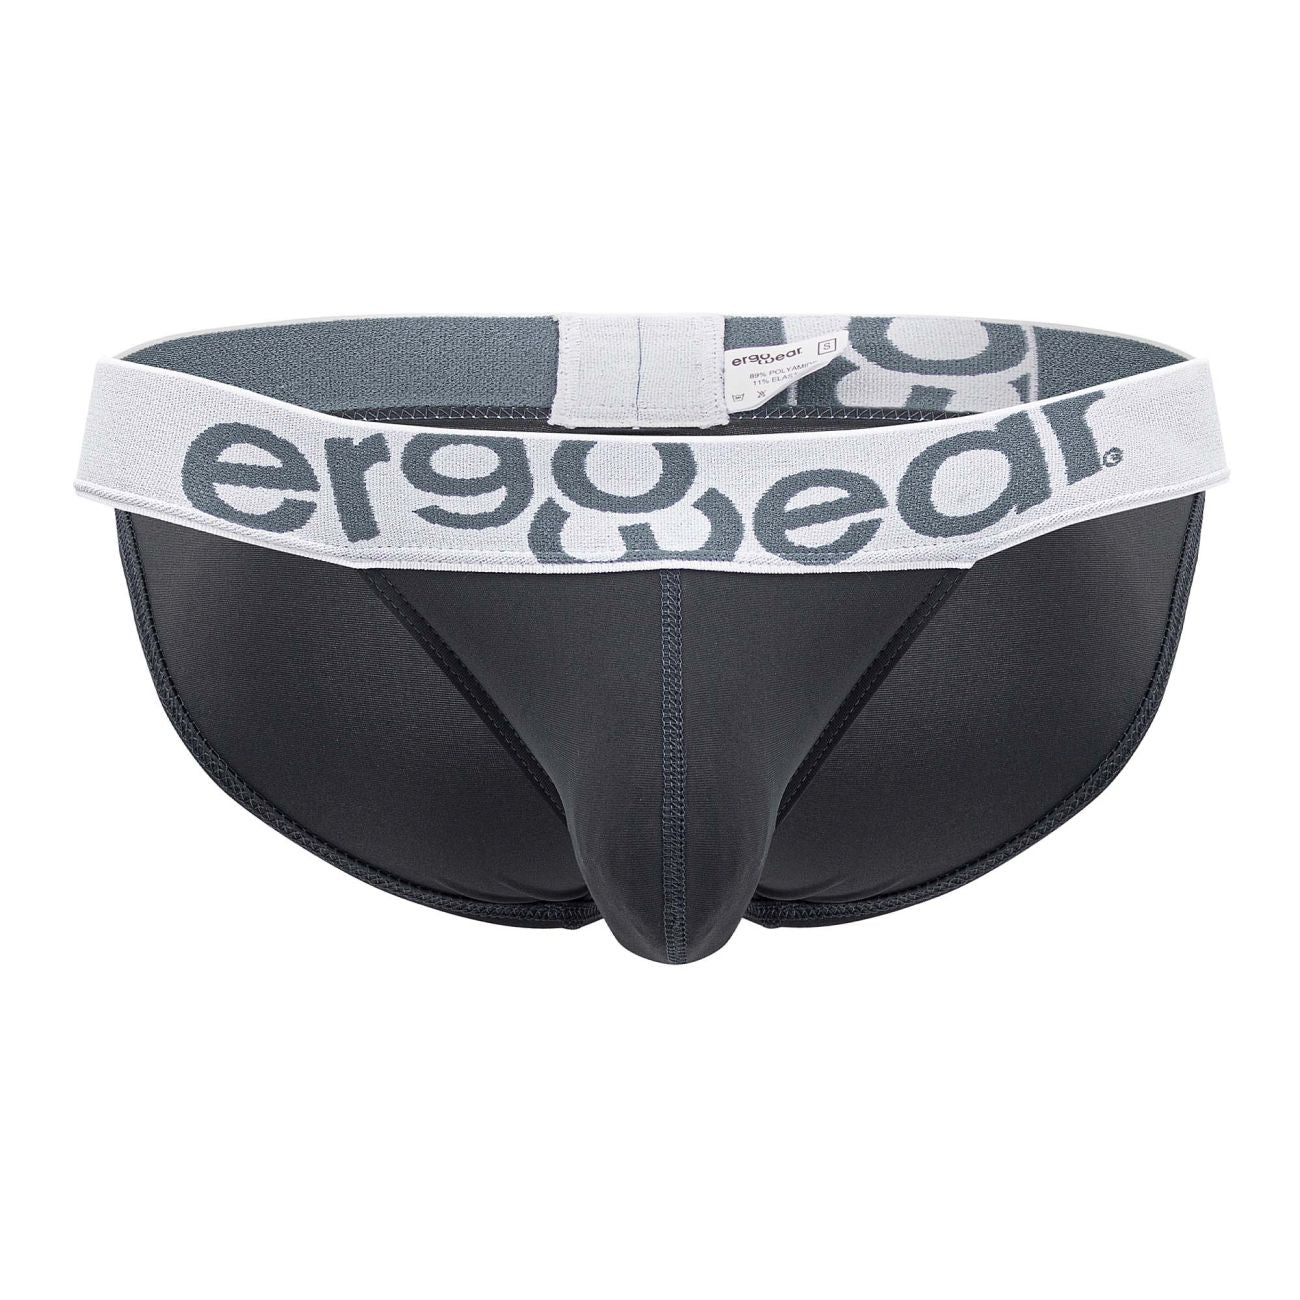 ErgoWear EW1449 MAX SP Bikini Steel Gray